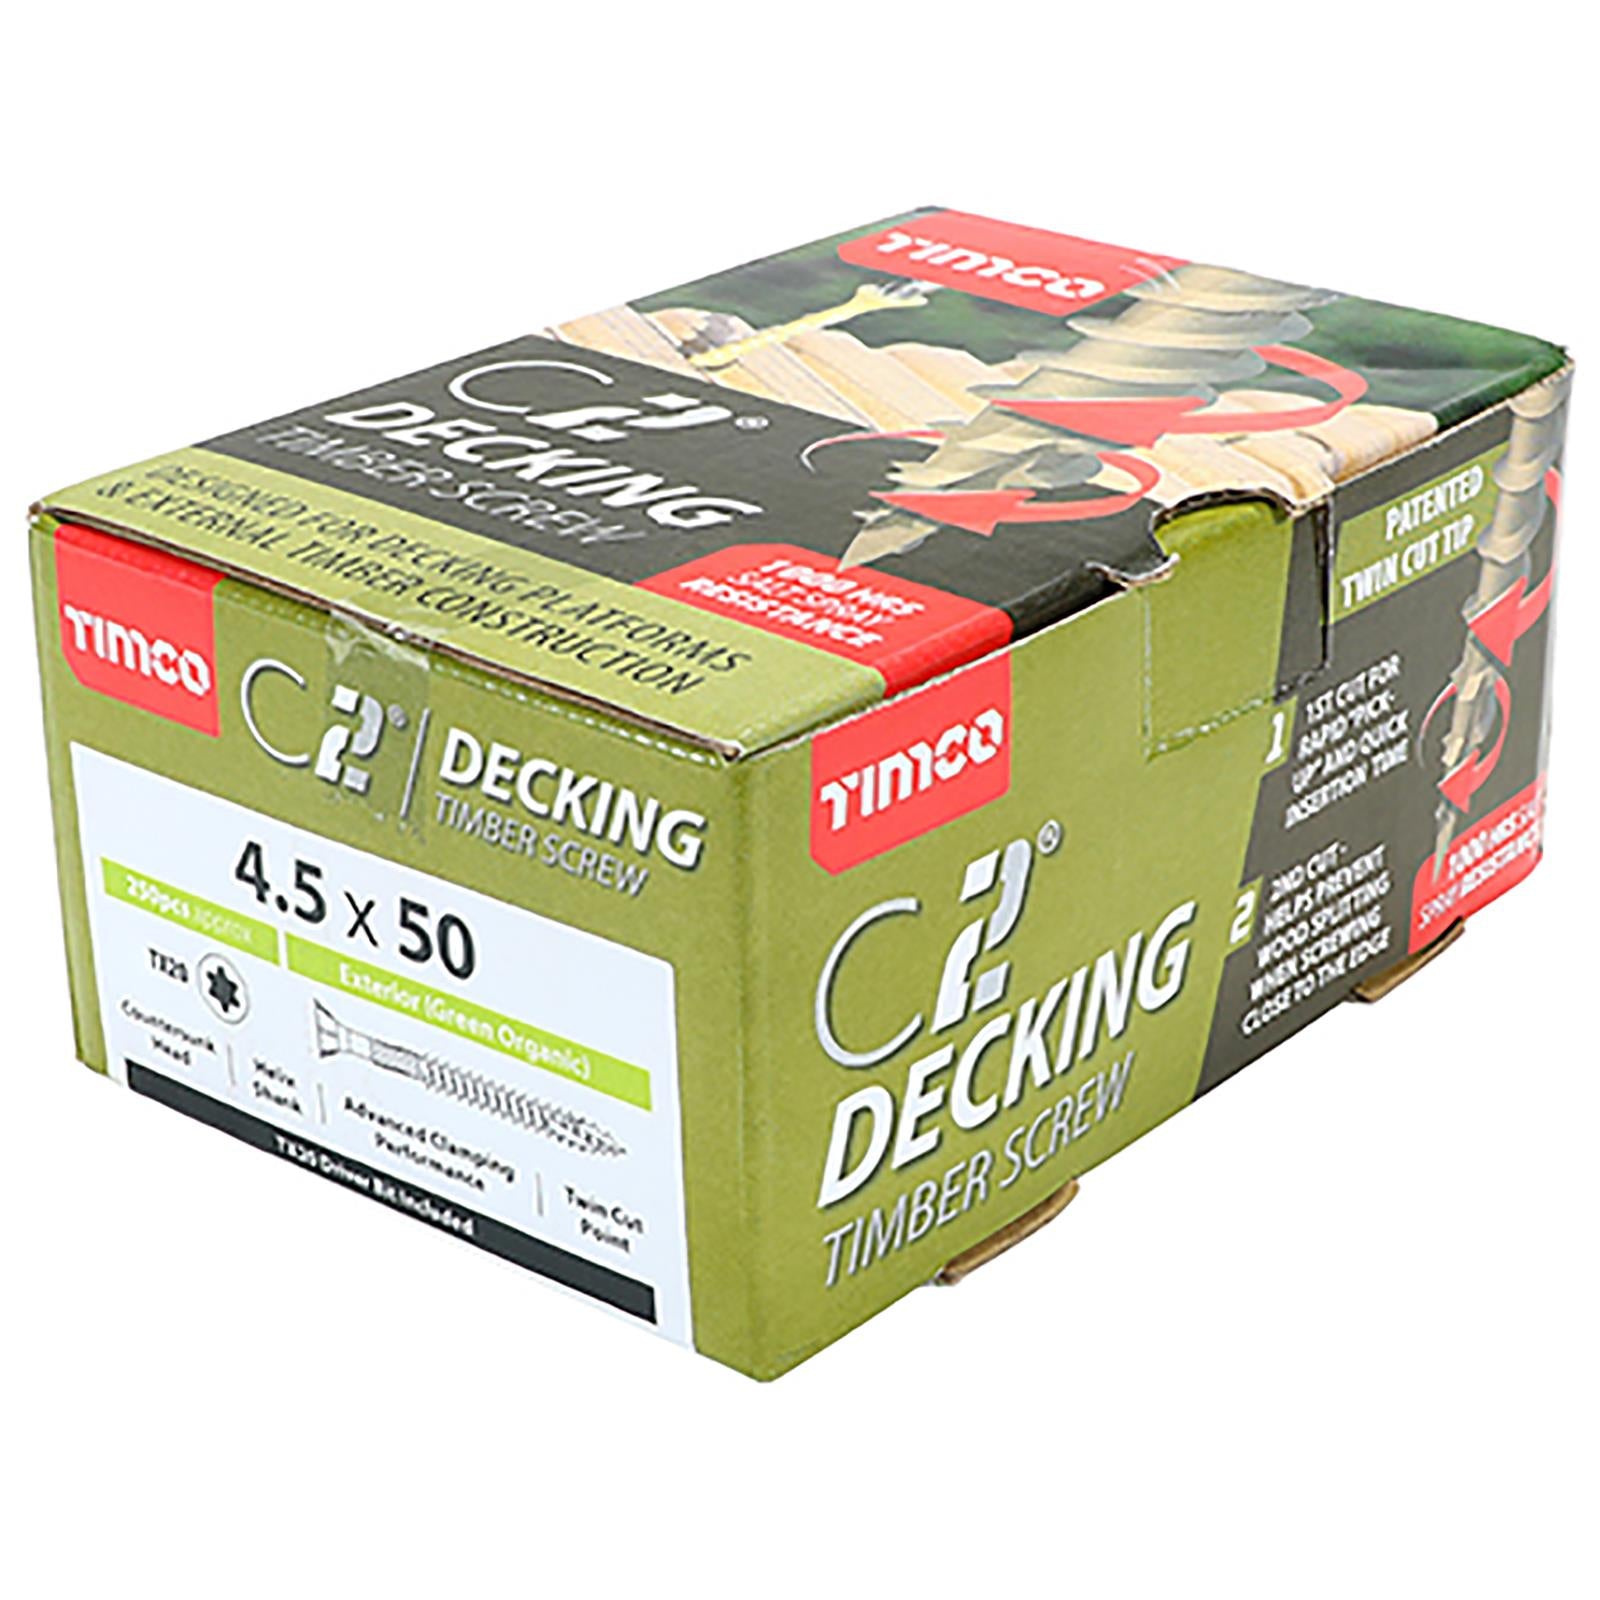 TIMCO C2 Deck Fix Premium Decking Screws Torx Exterior Green Timber Construction